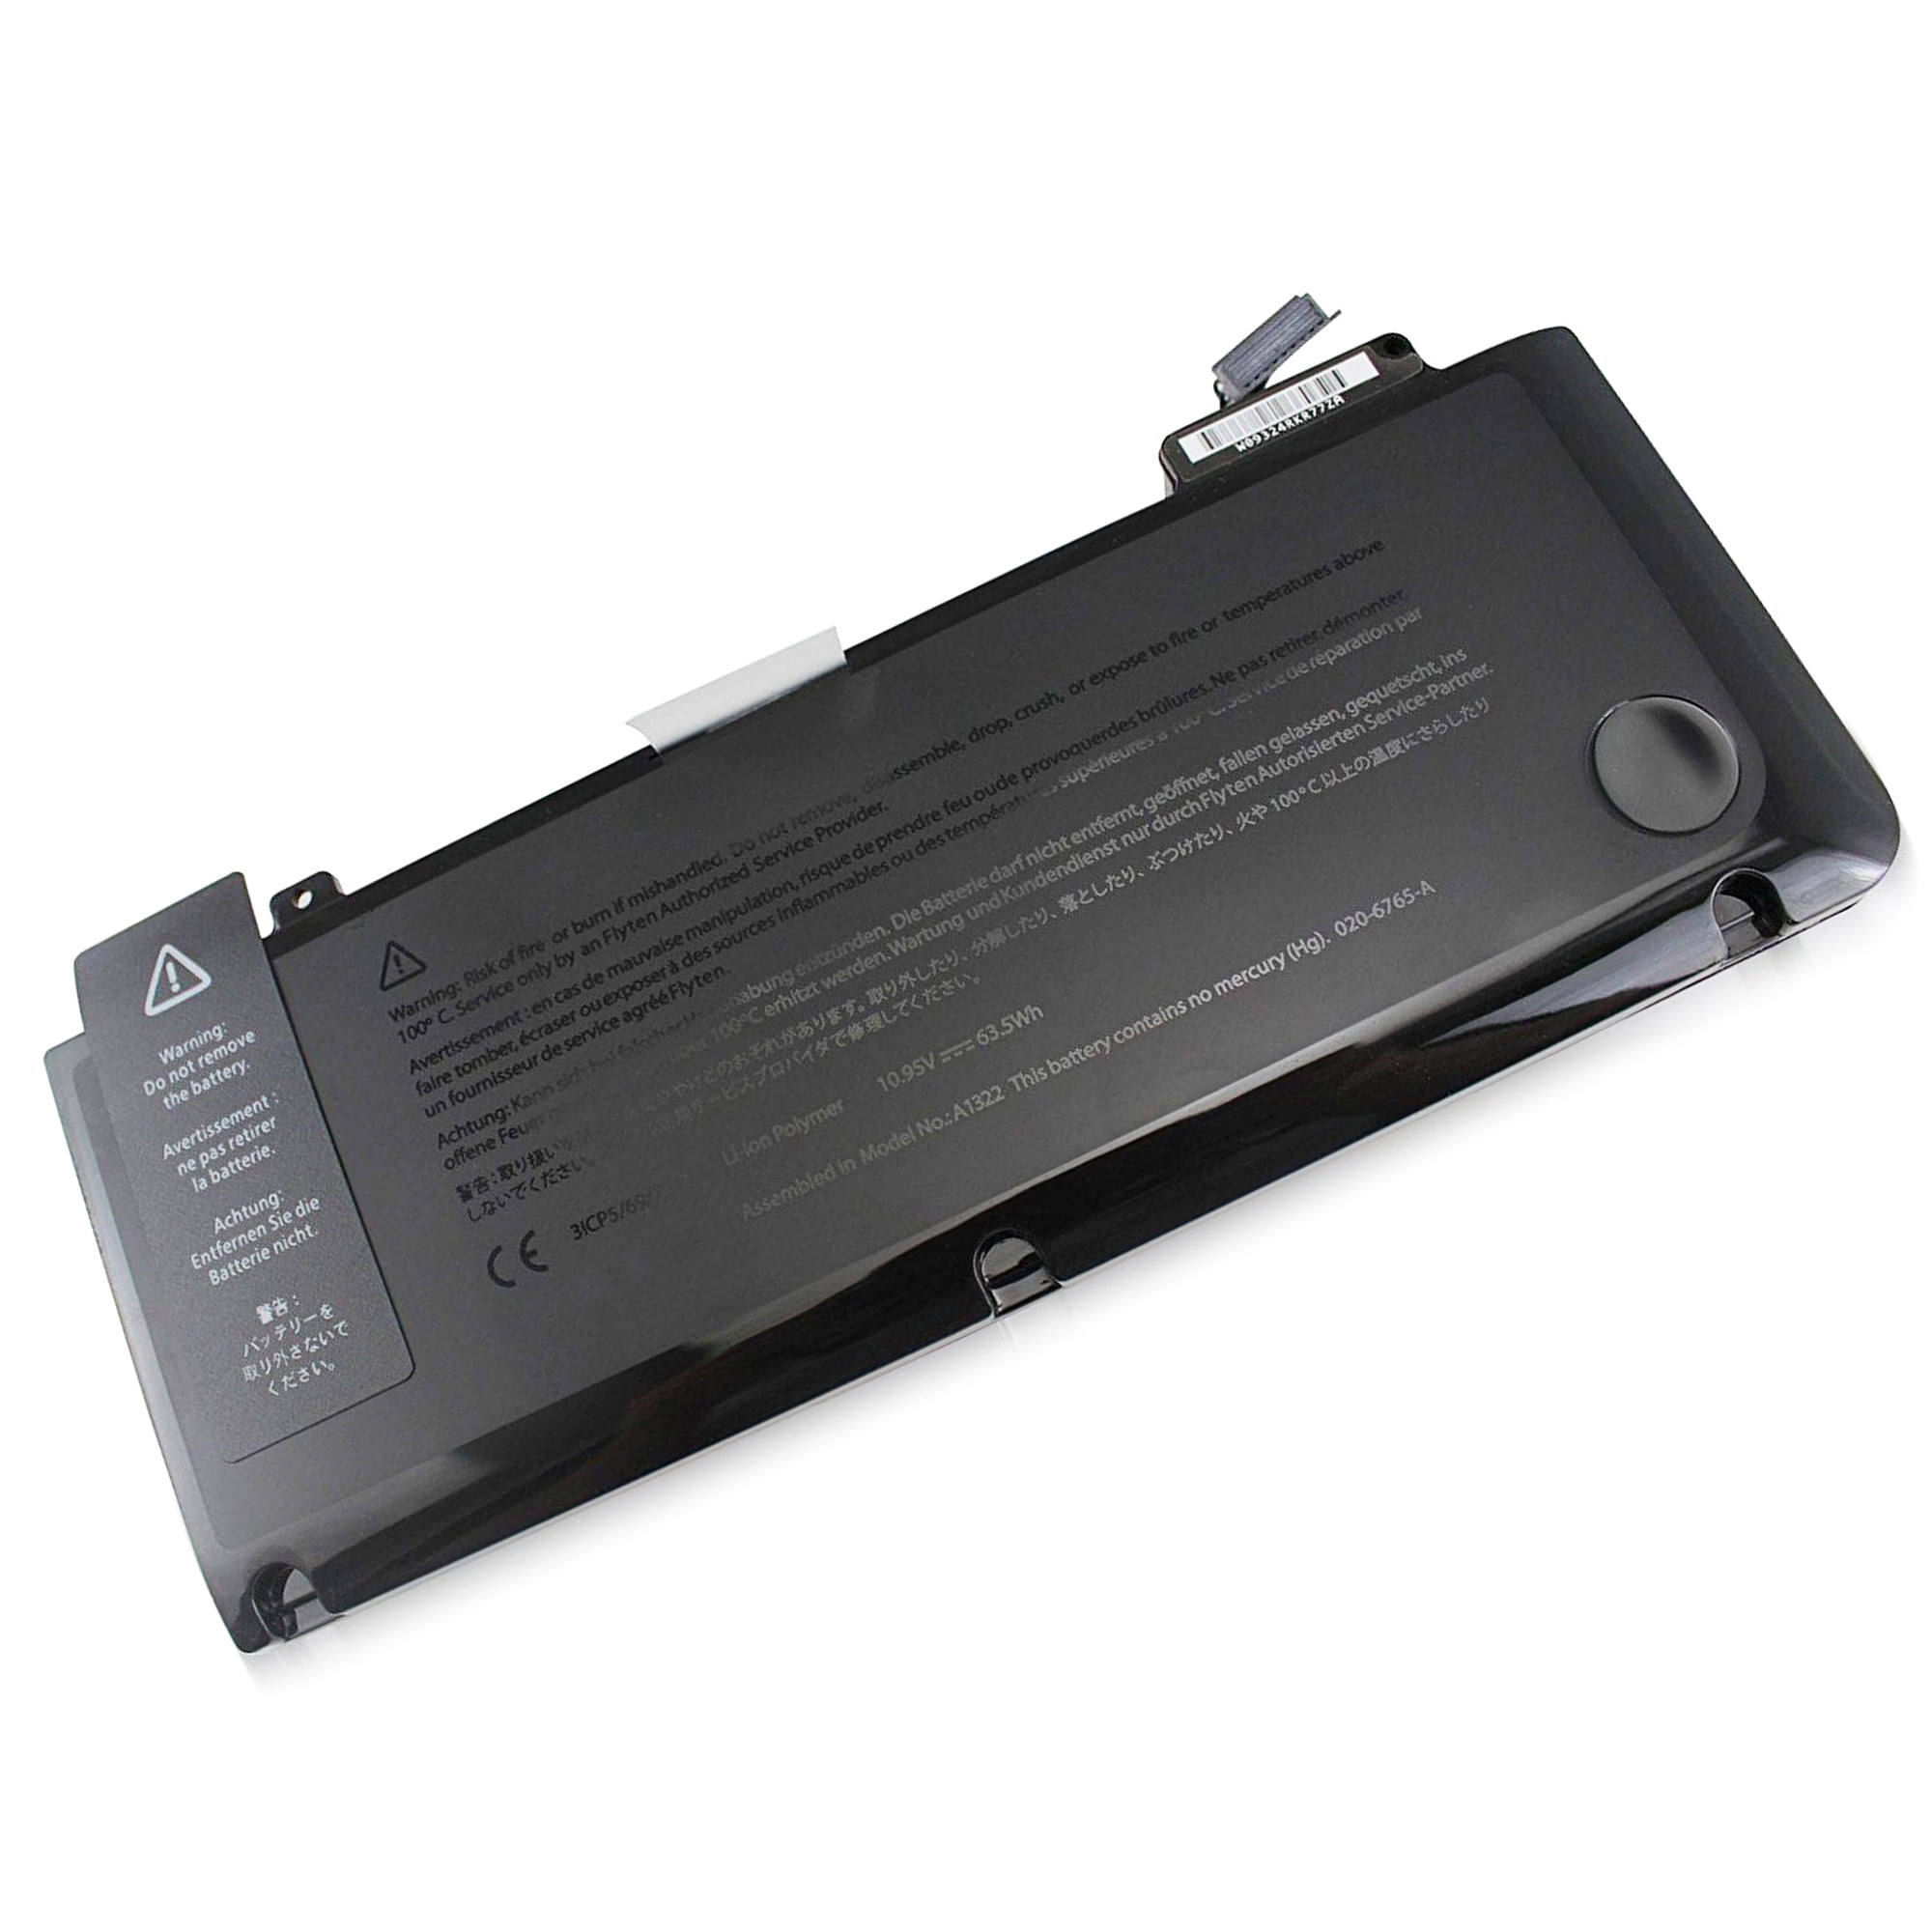 EBK 6-cell Battery for Mac Book Pro 13 inch A1278 (Mid 2012 Version), MacBookPro9,2 Laptop Battery - Walmart.com